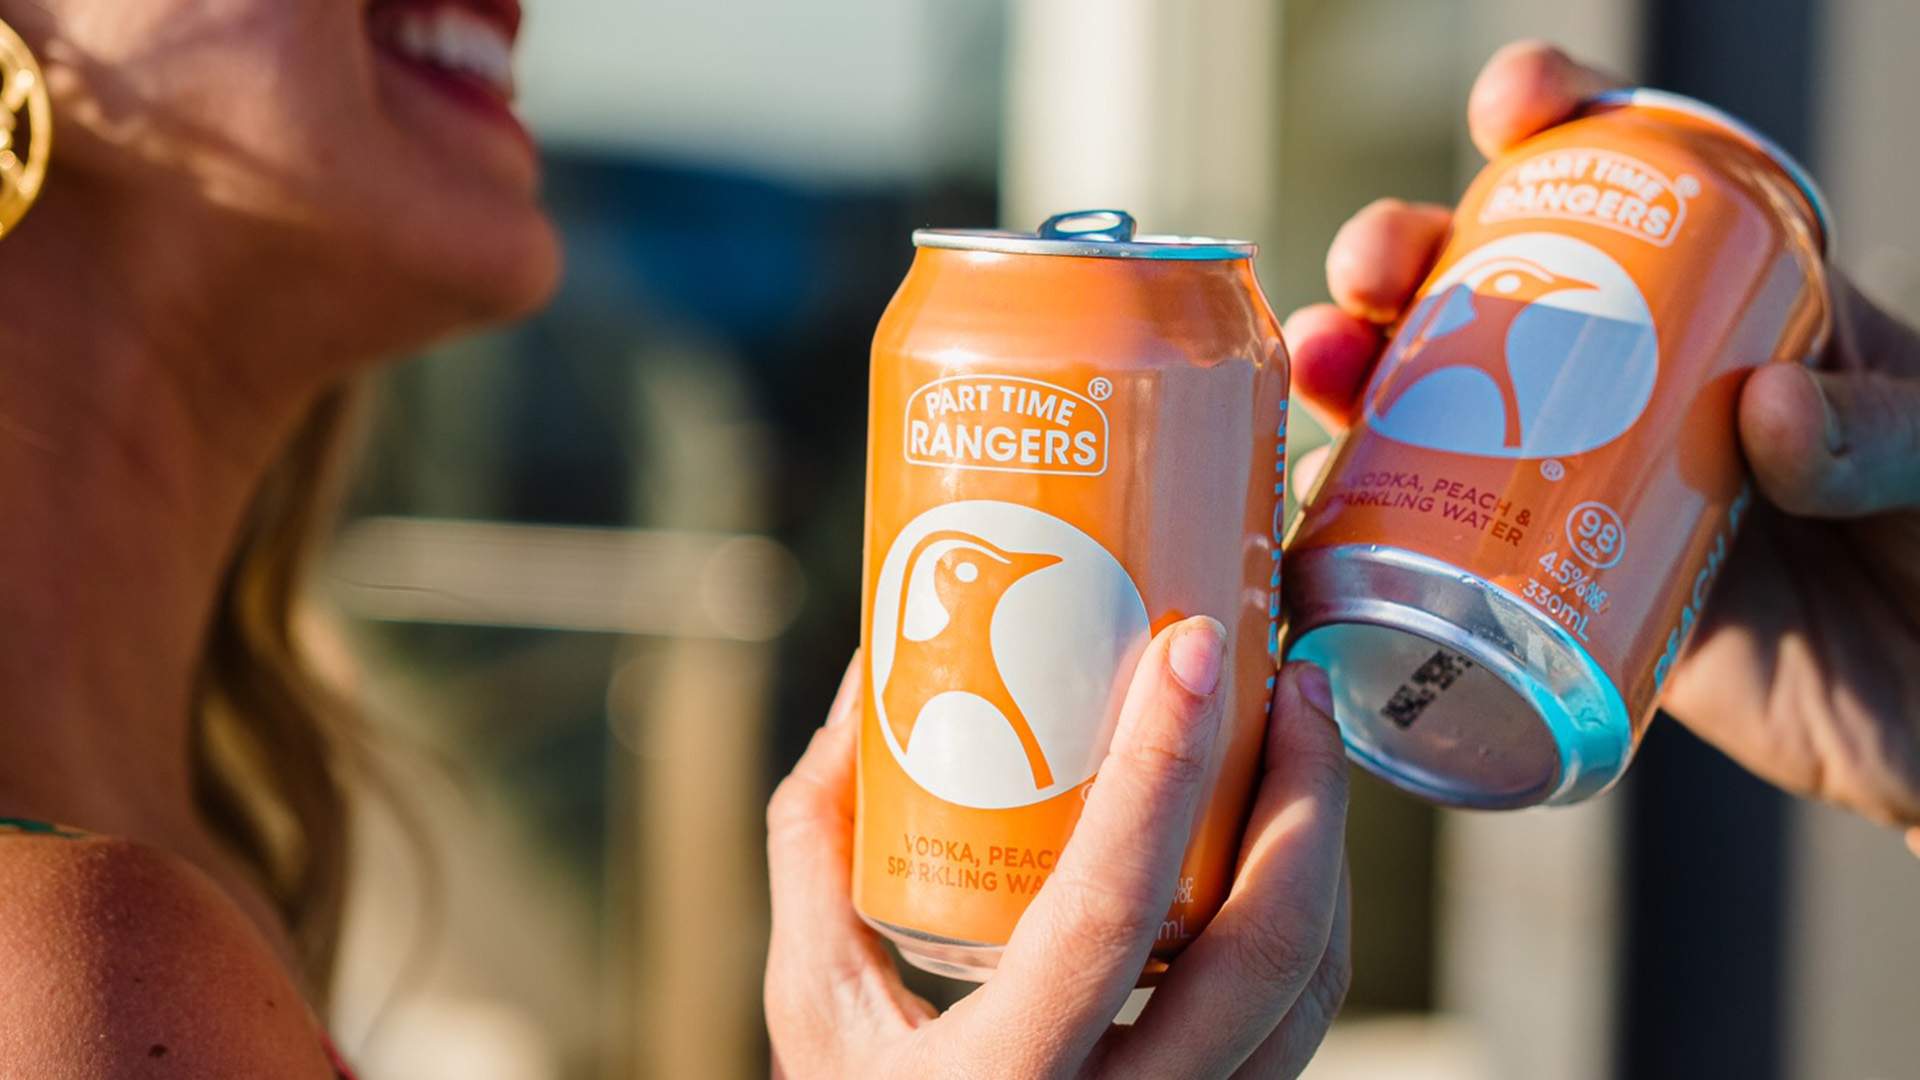 Part Time Rangers' Adorable New Peach Seltzer Is Raising Money for Penguin Conservation